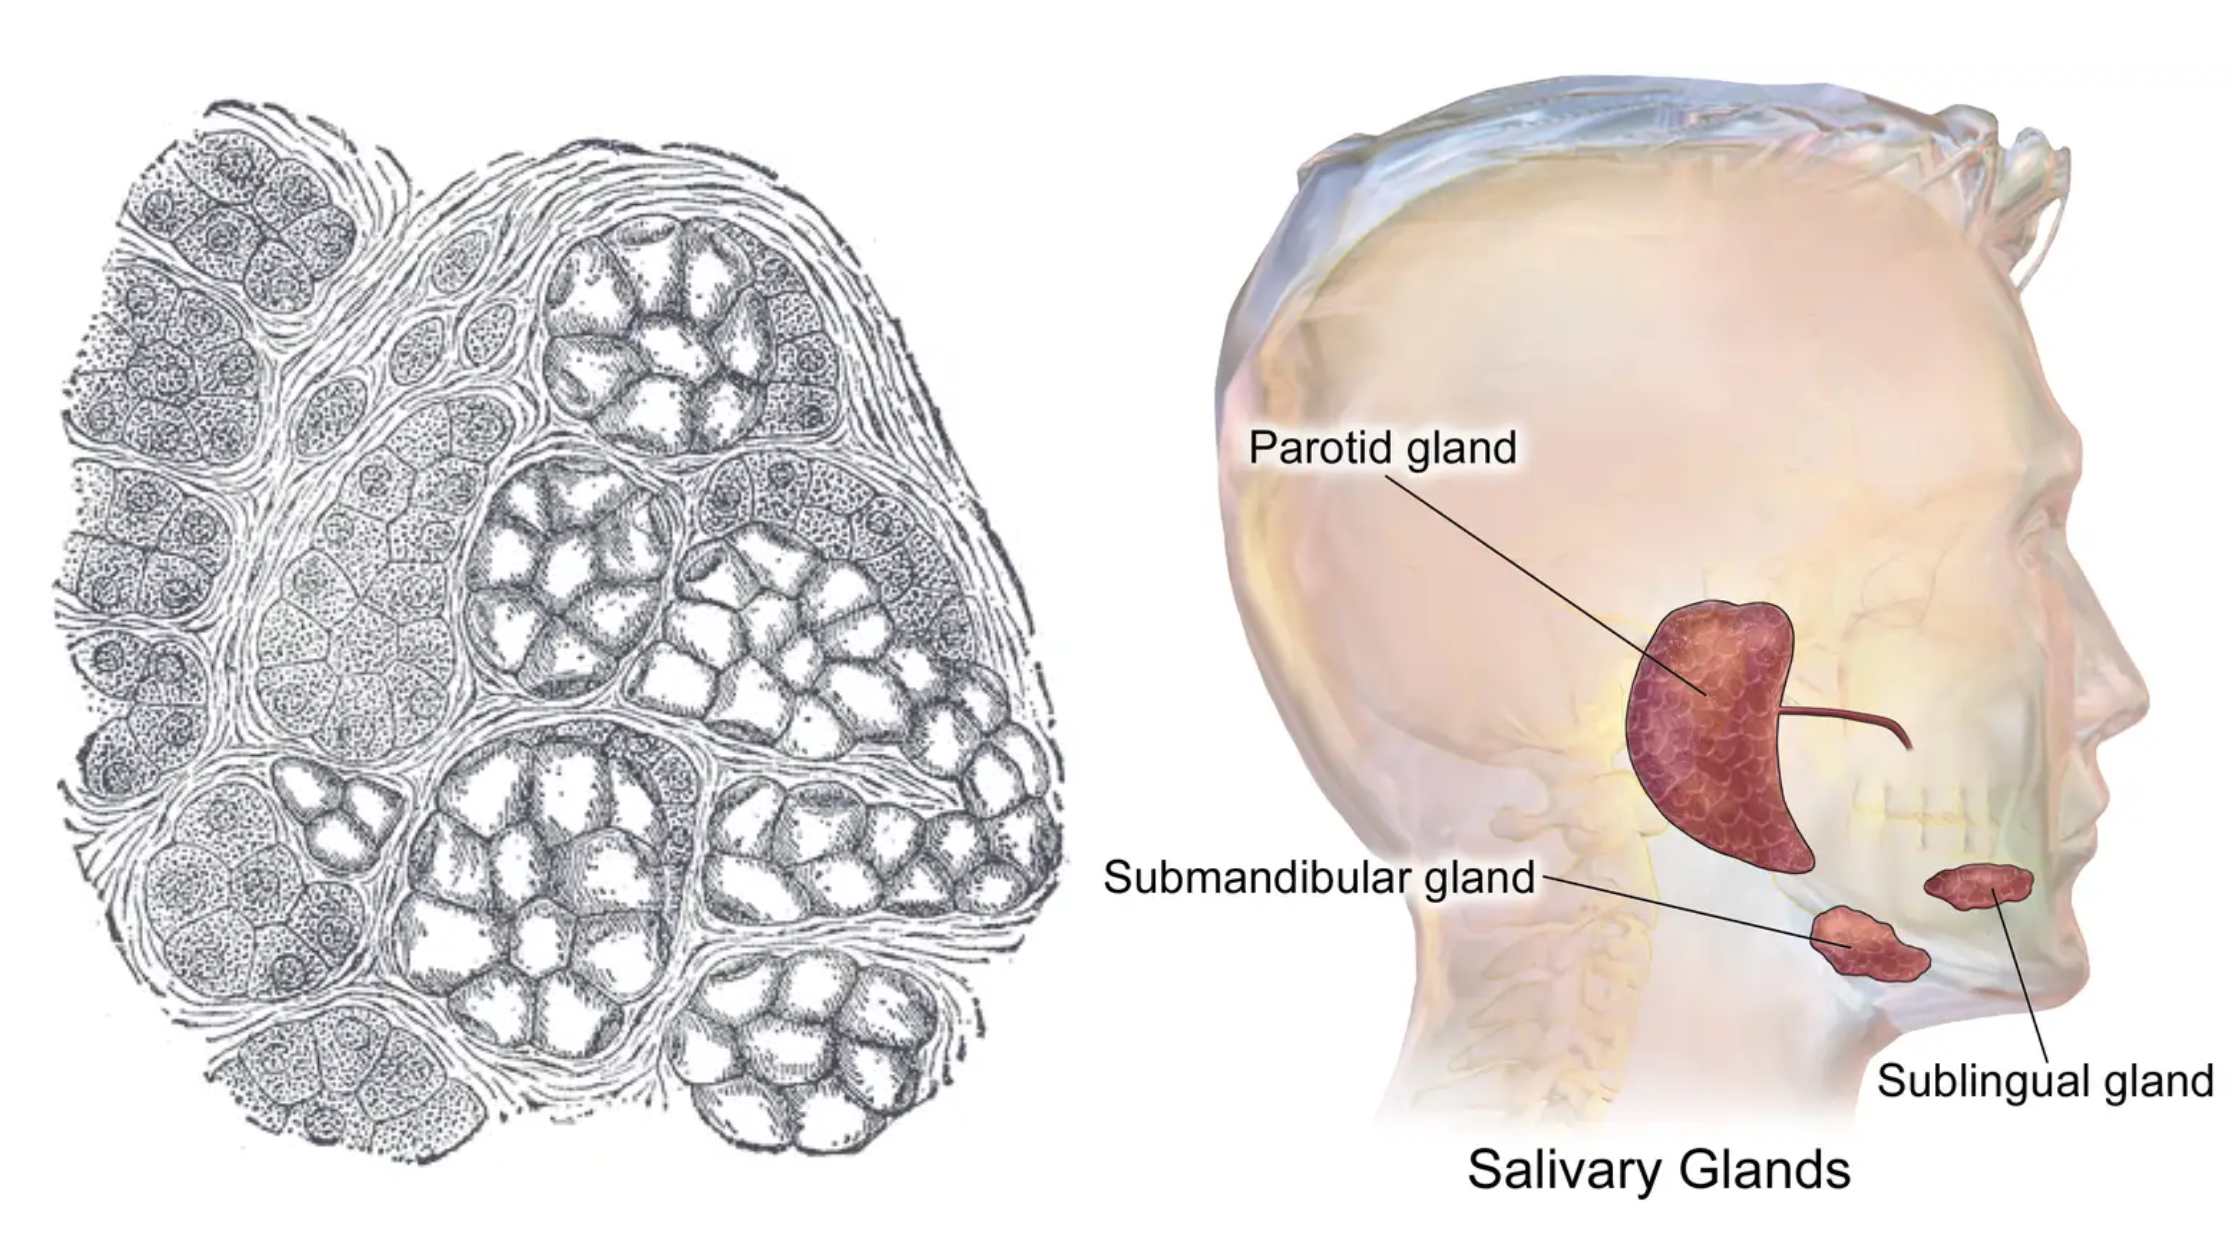 Submandibular Gland - Definition, Structure, Functions